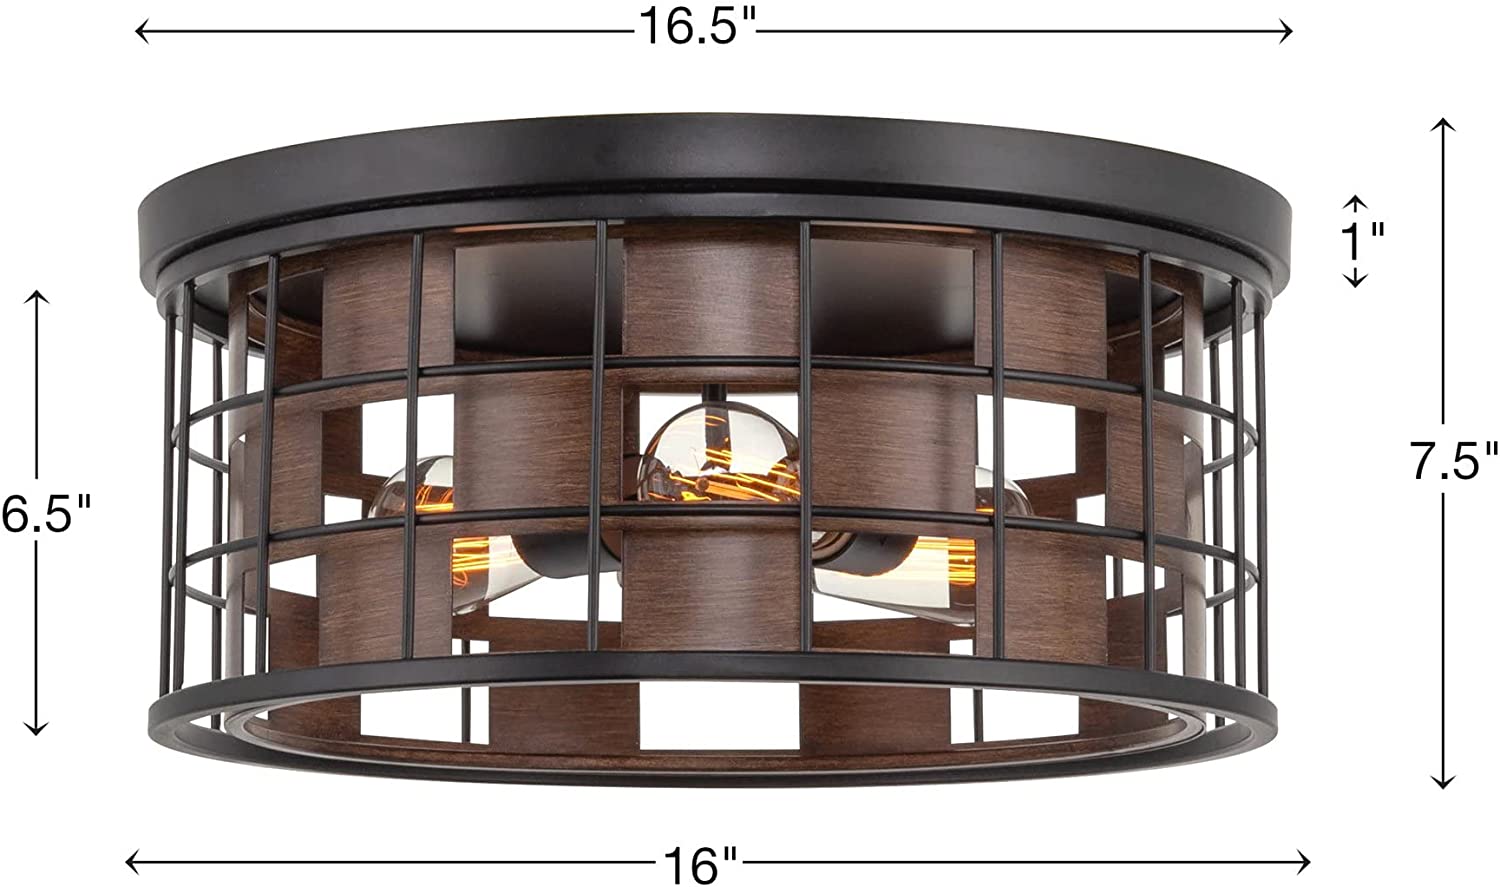 3 light vintage home flush mount fixture black frame ceiling light with wood style finish